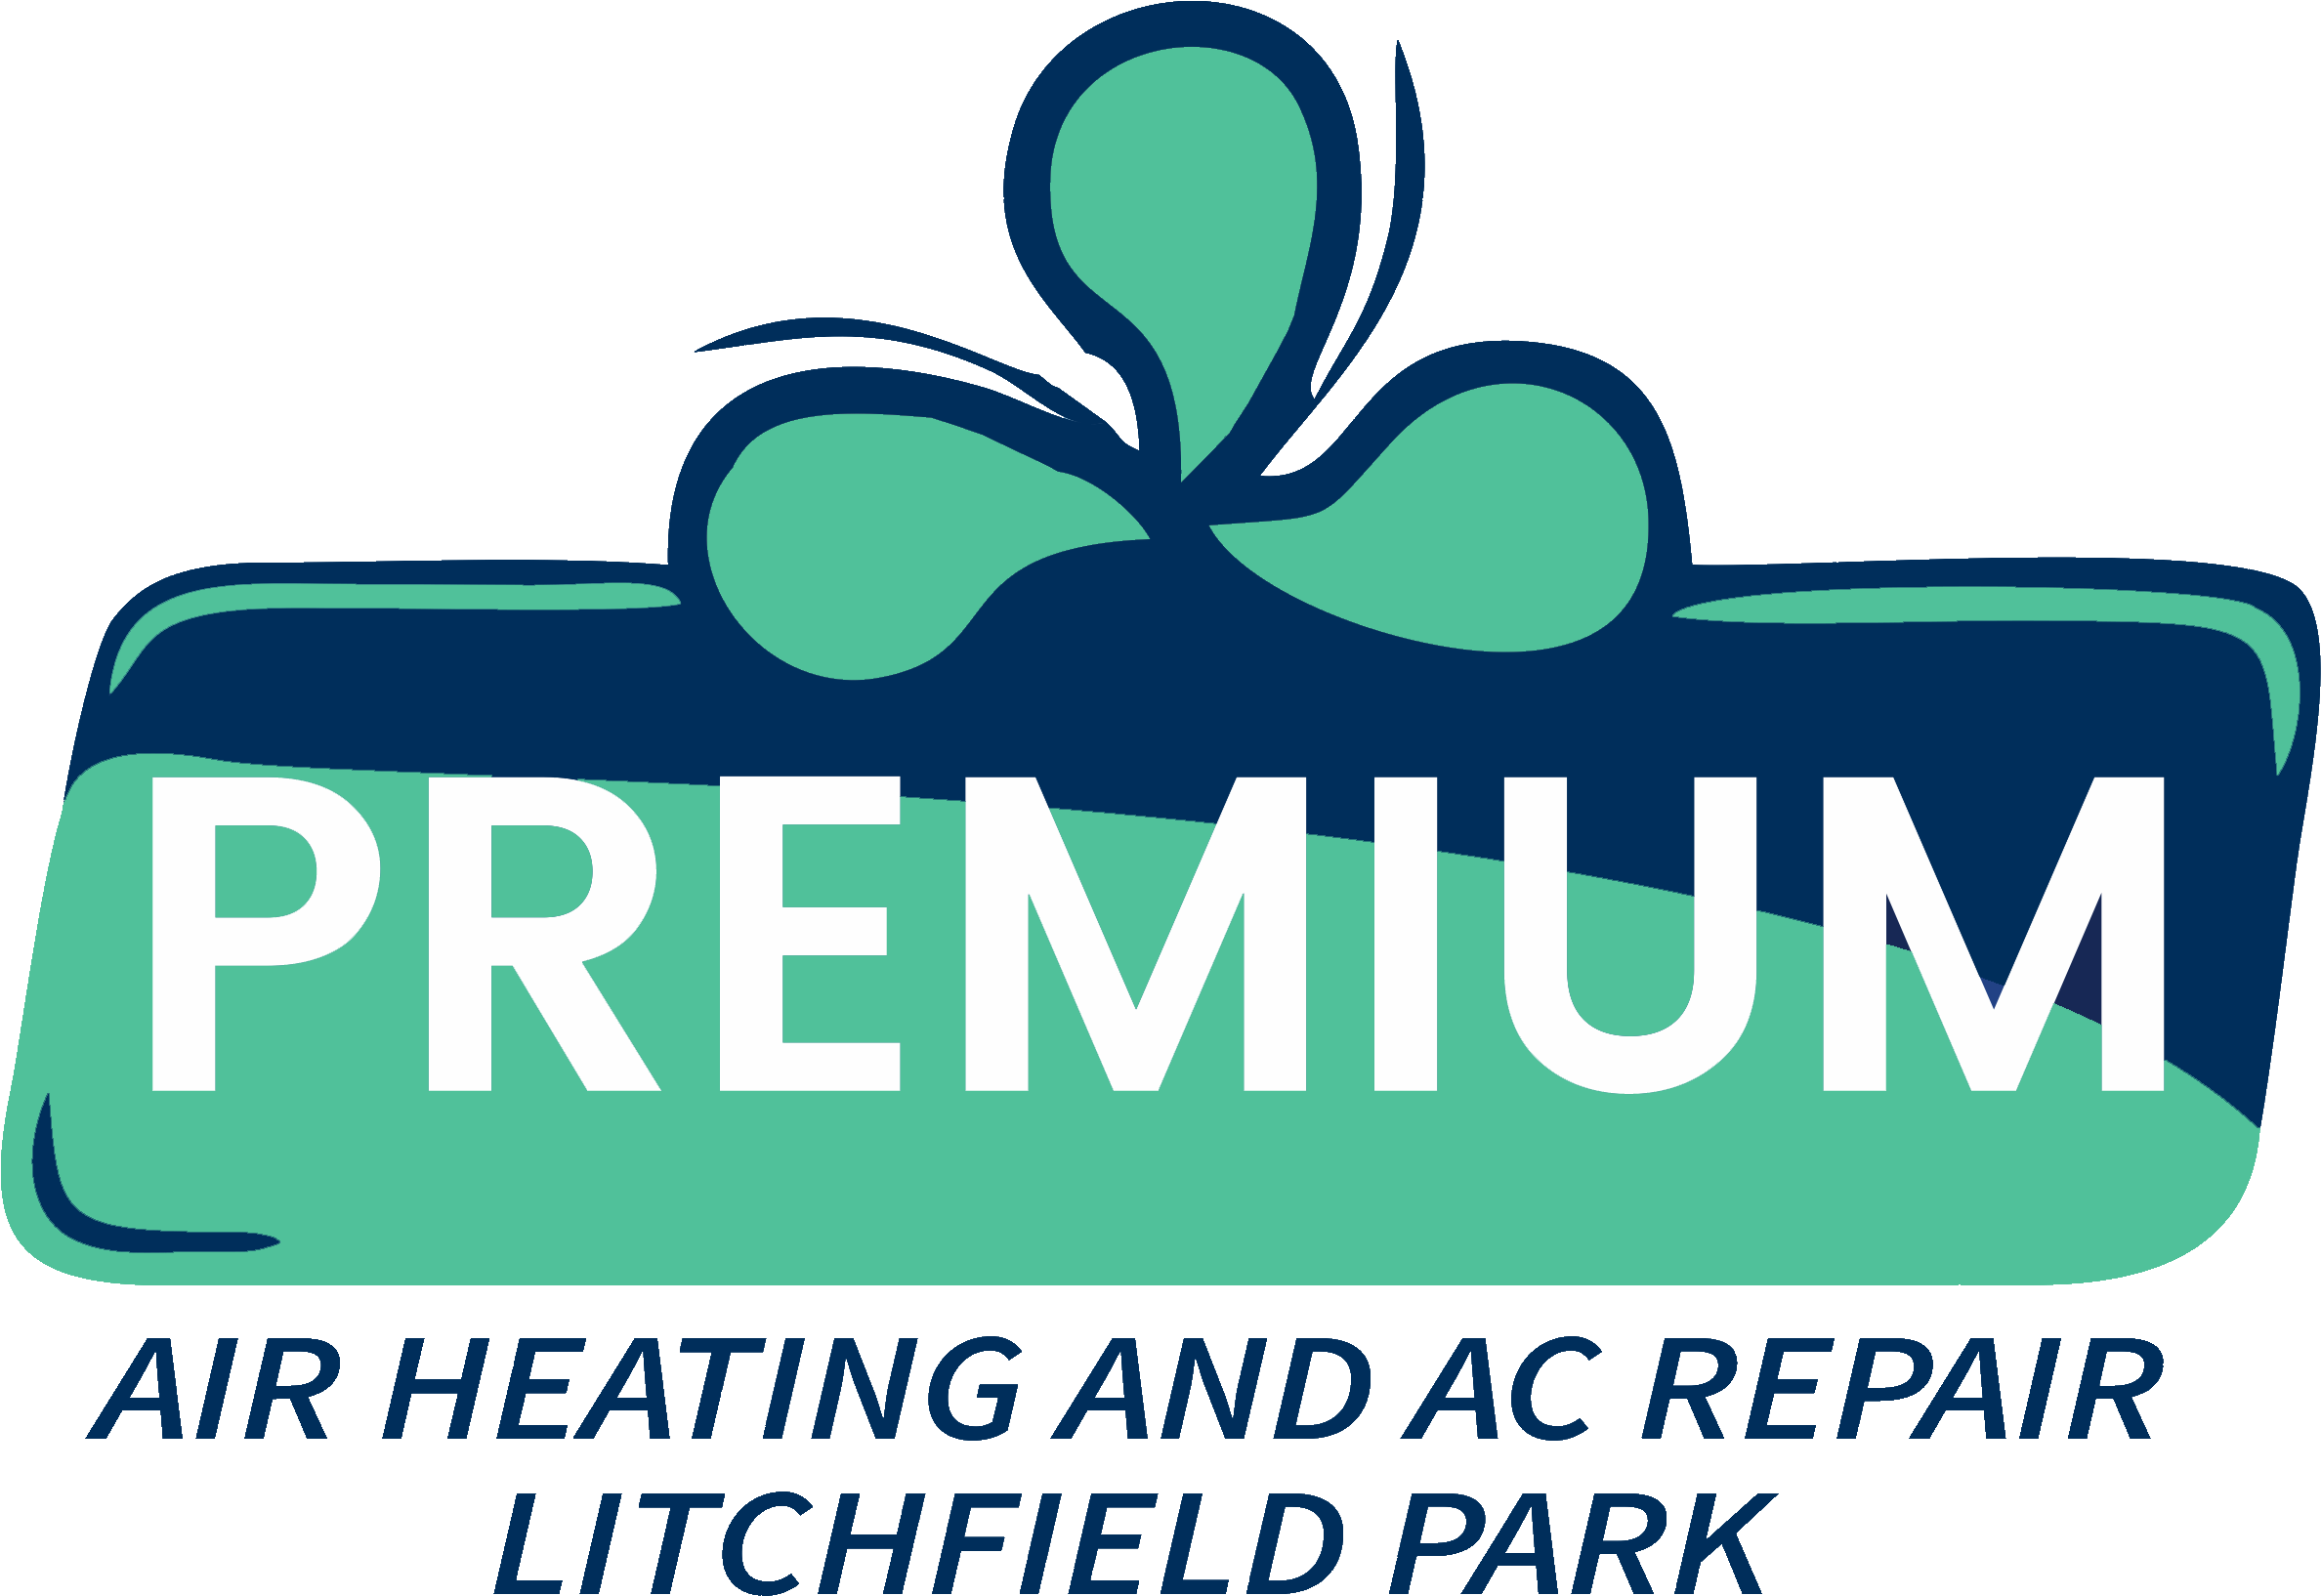 Premium Air Heating - Premium Air Heating / Ac Repair (2400x1645)